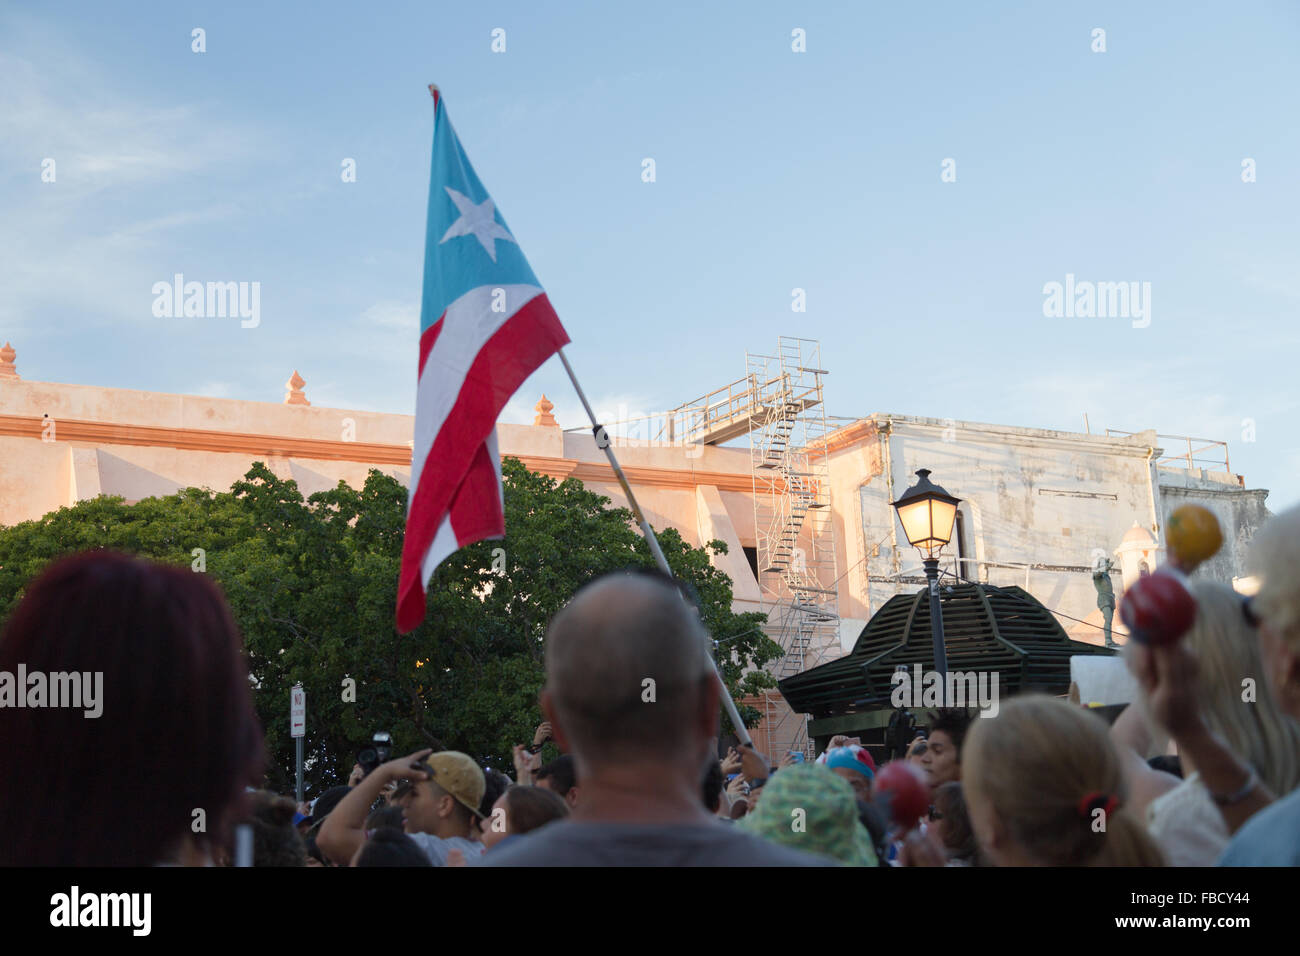 San Juan, Puerto Rico. 14. Januar, 2016. Eine Person trägt ein Puerto Rican Flag am San Sebastian Street Festival. Maria S./Alamy leben Nachrichten Stockfoto